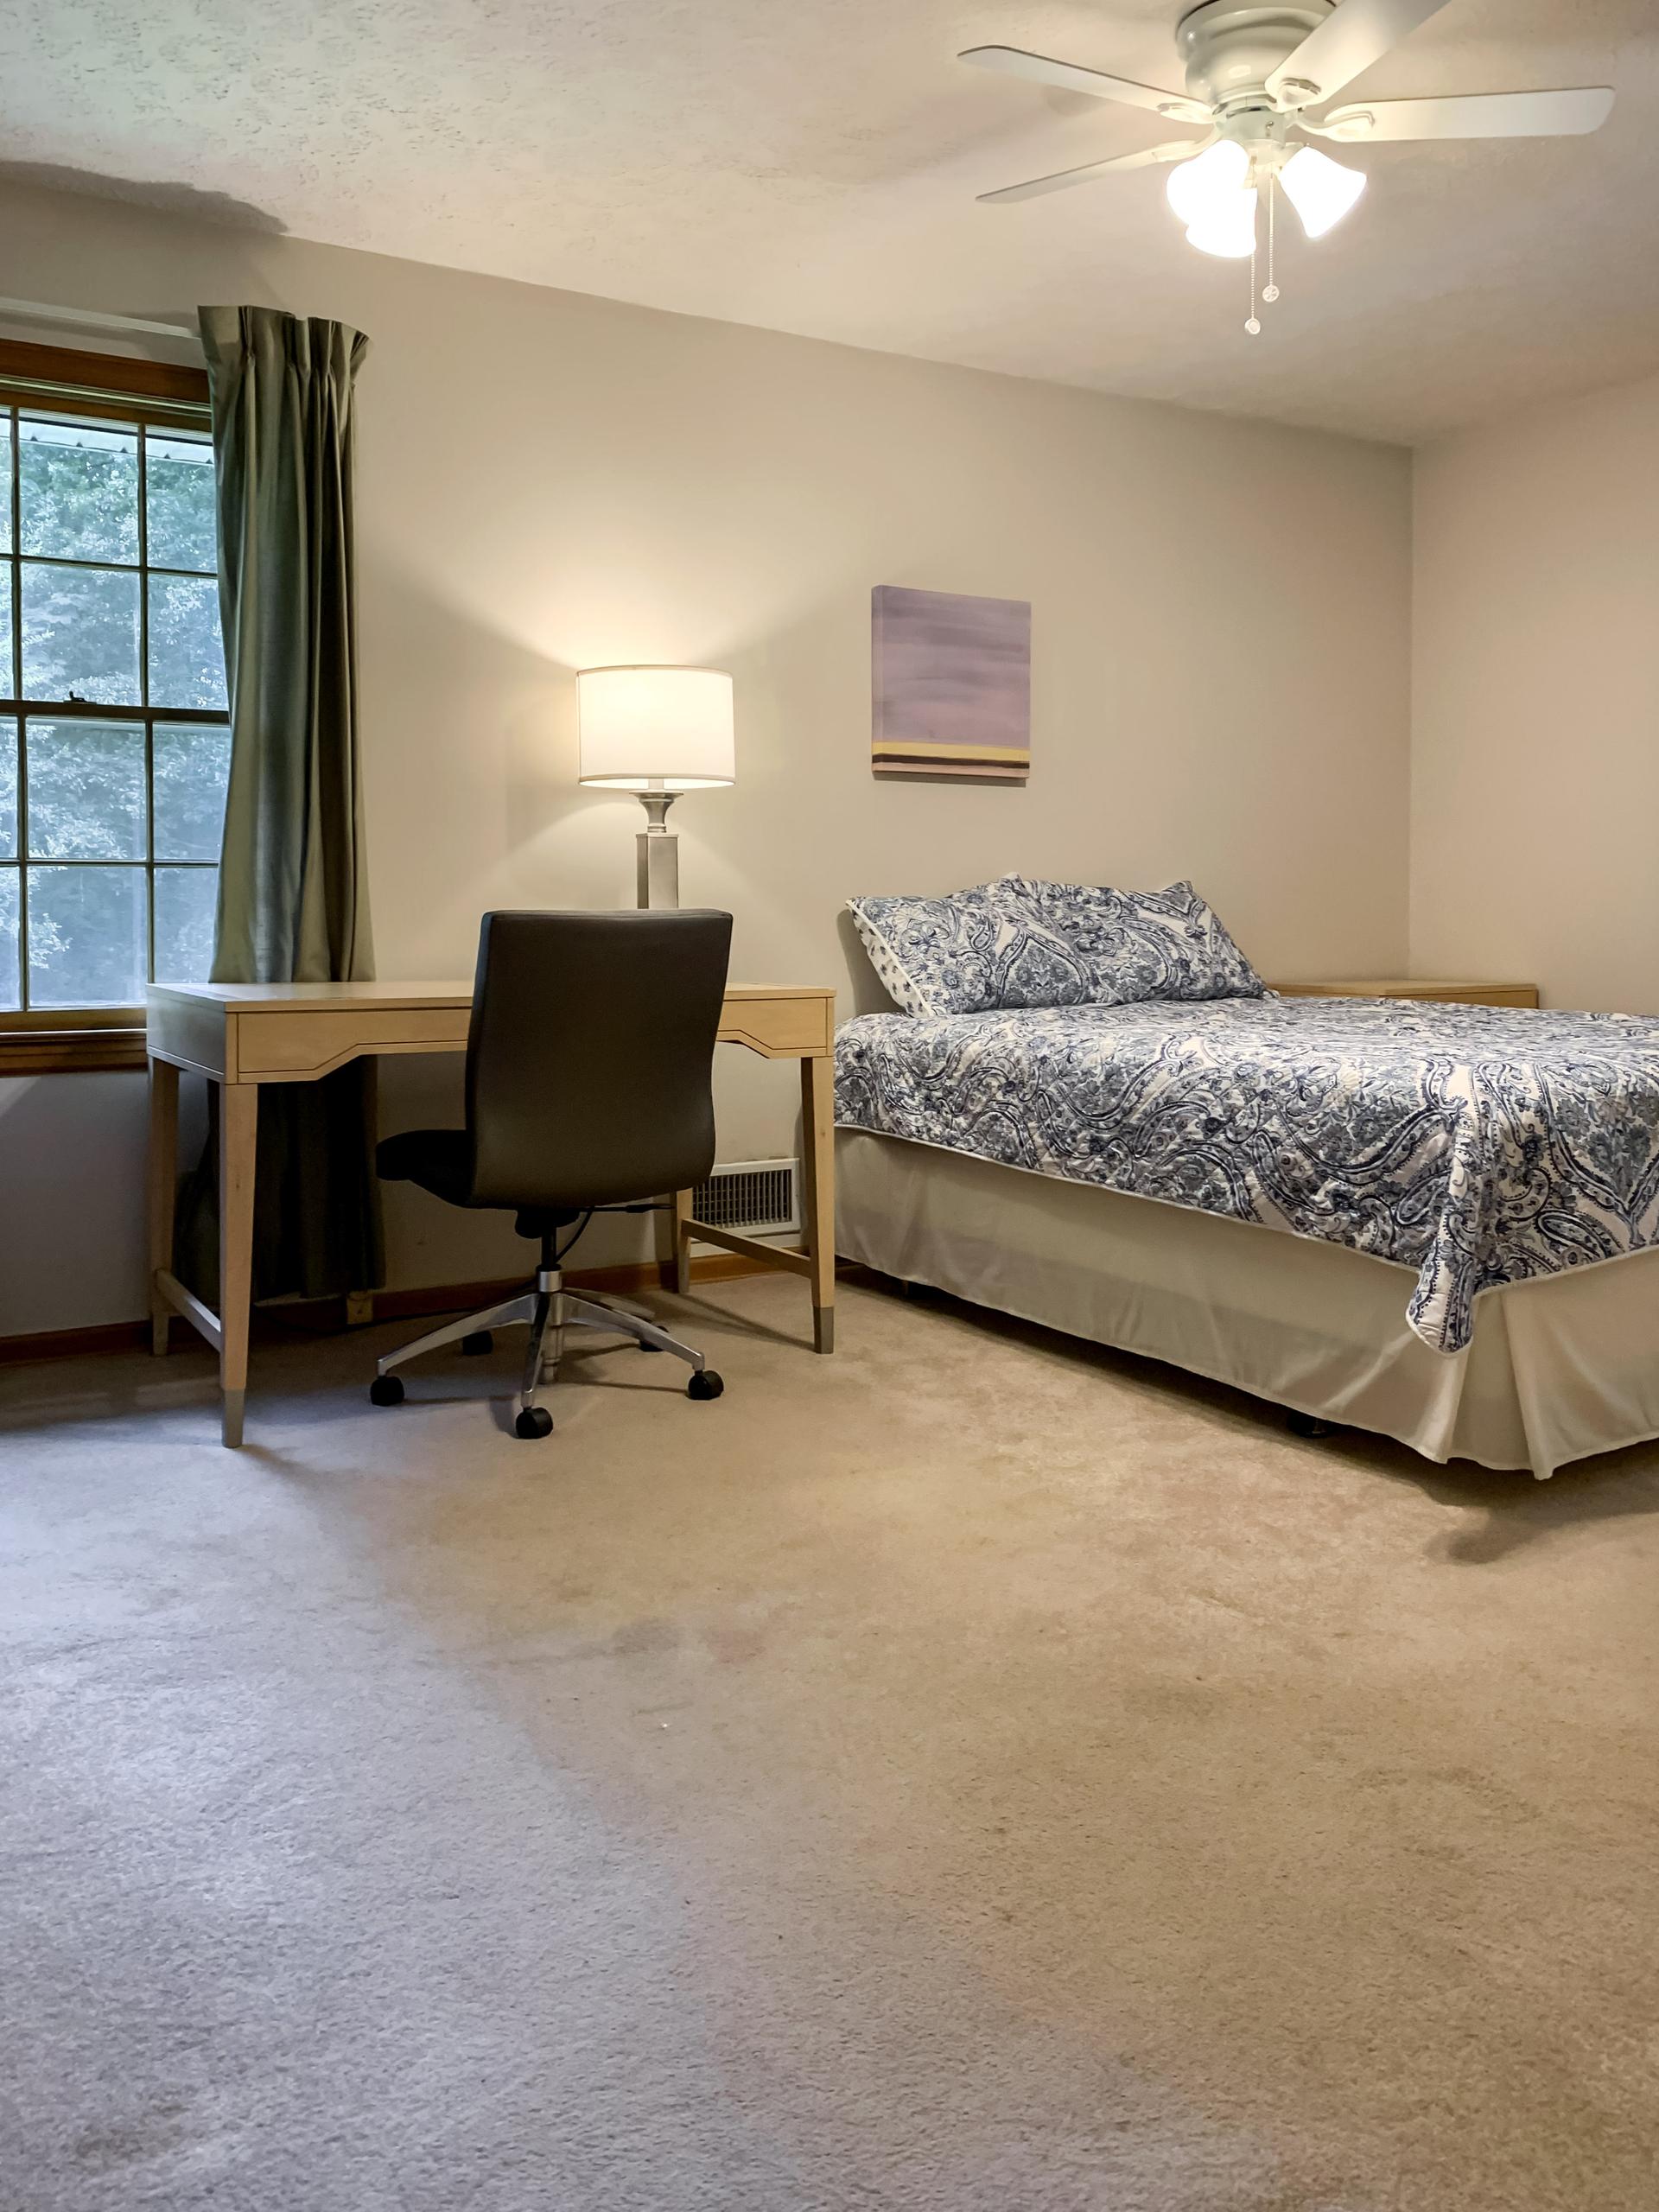 bedroom, detected: ceiling fan, window blind, carpet, bed